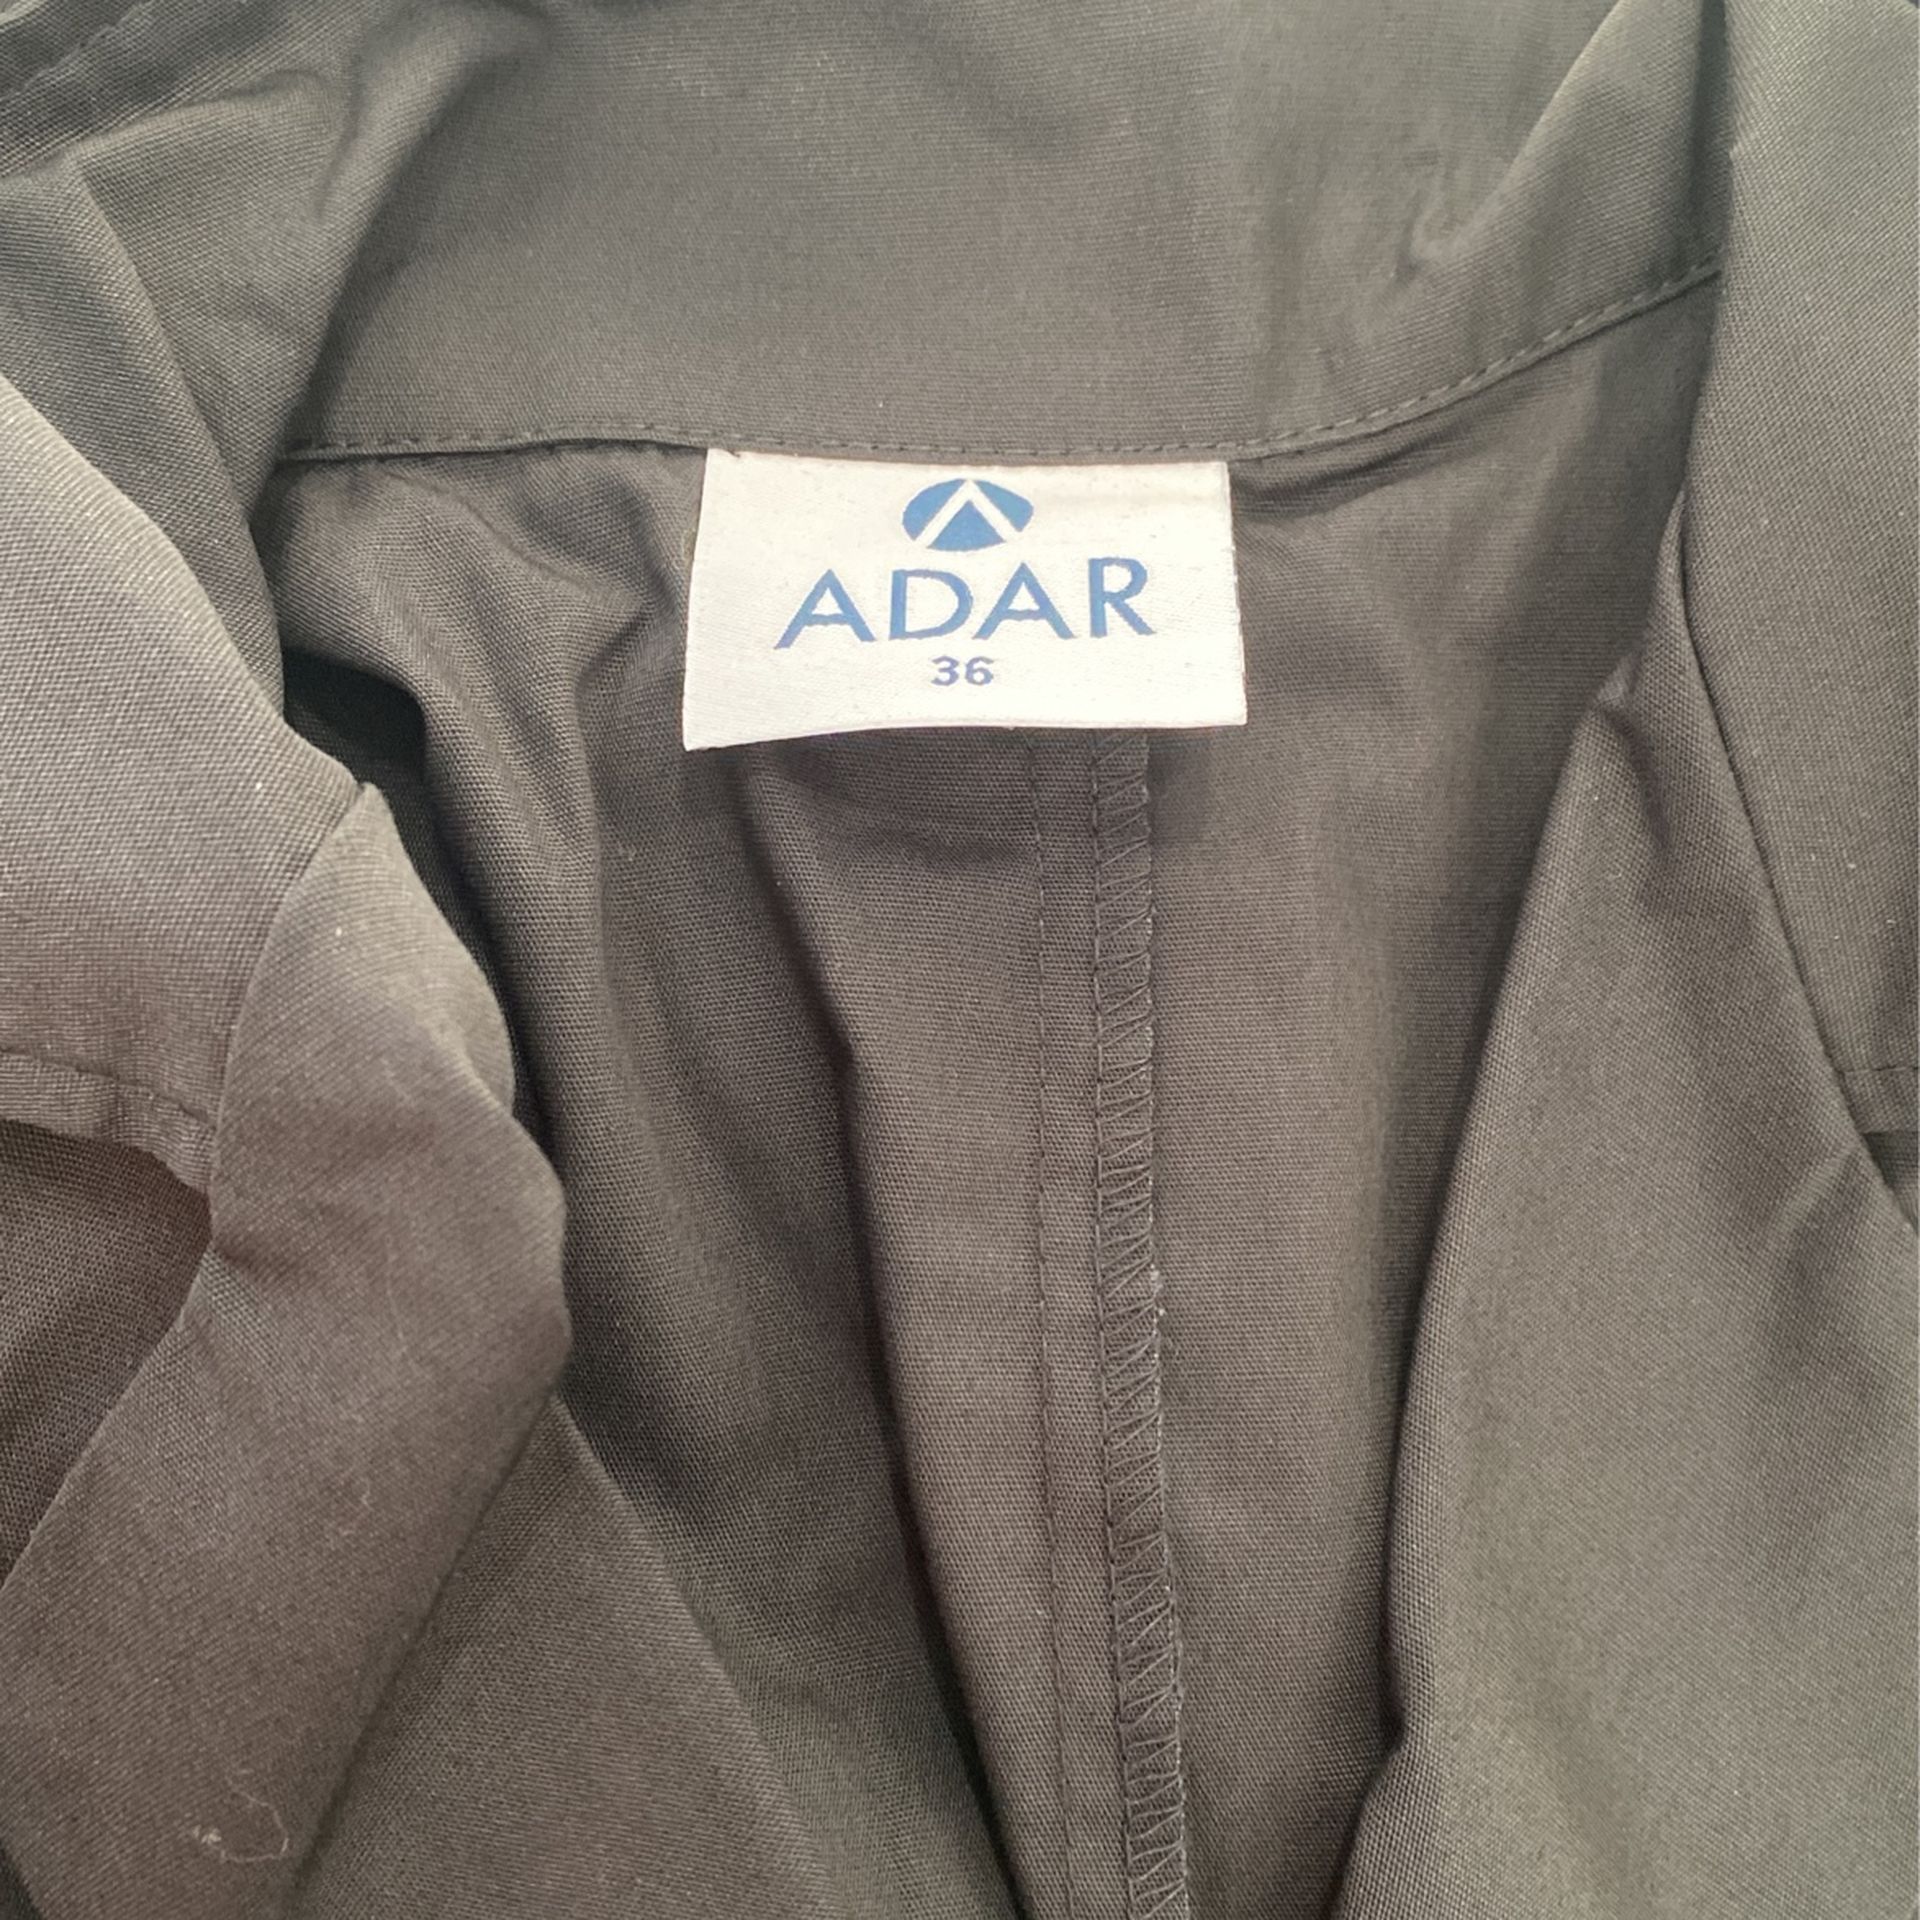 ADAR Black Scrubs Size 36